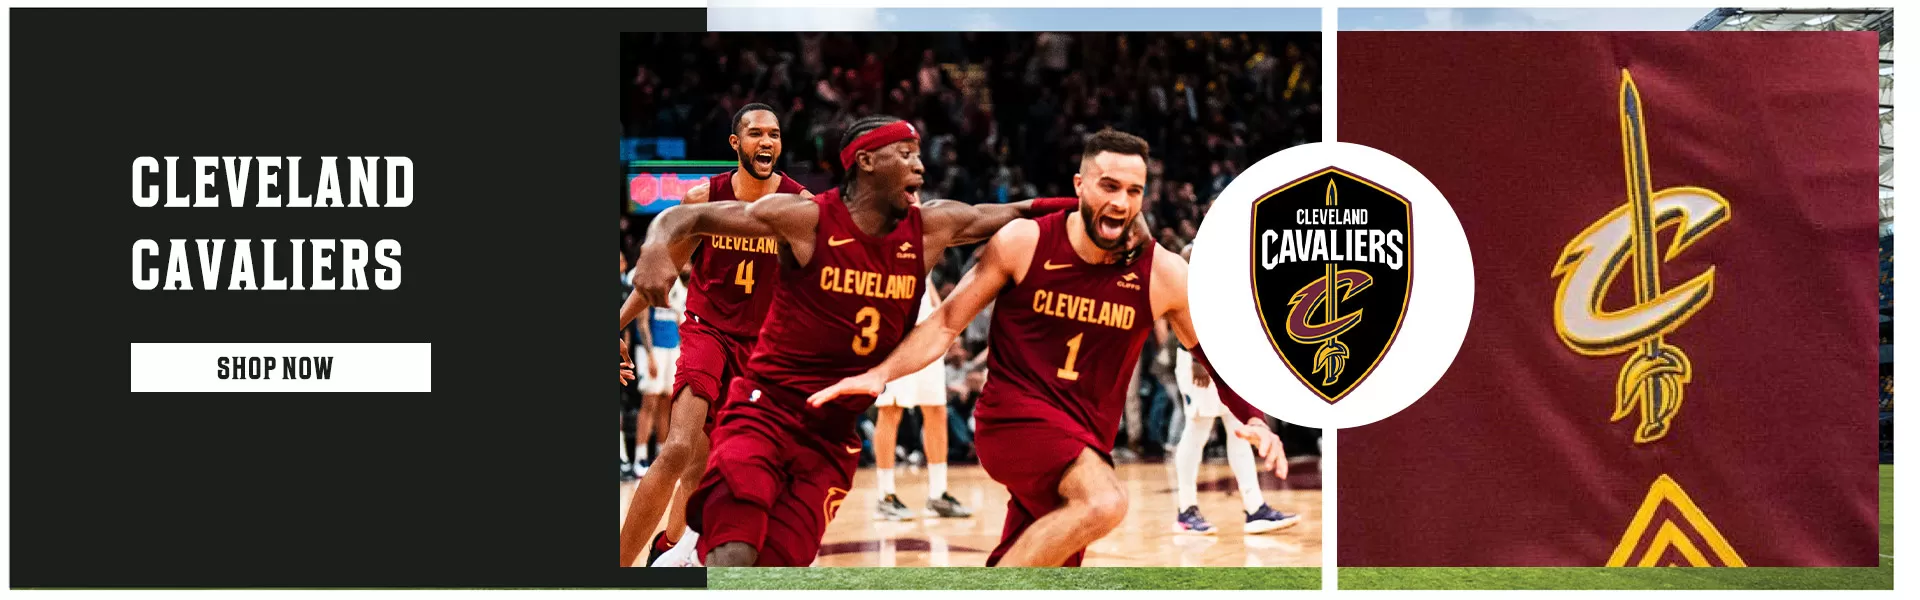 Cleveland-Cavaliers - buybasketballnow